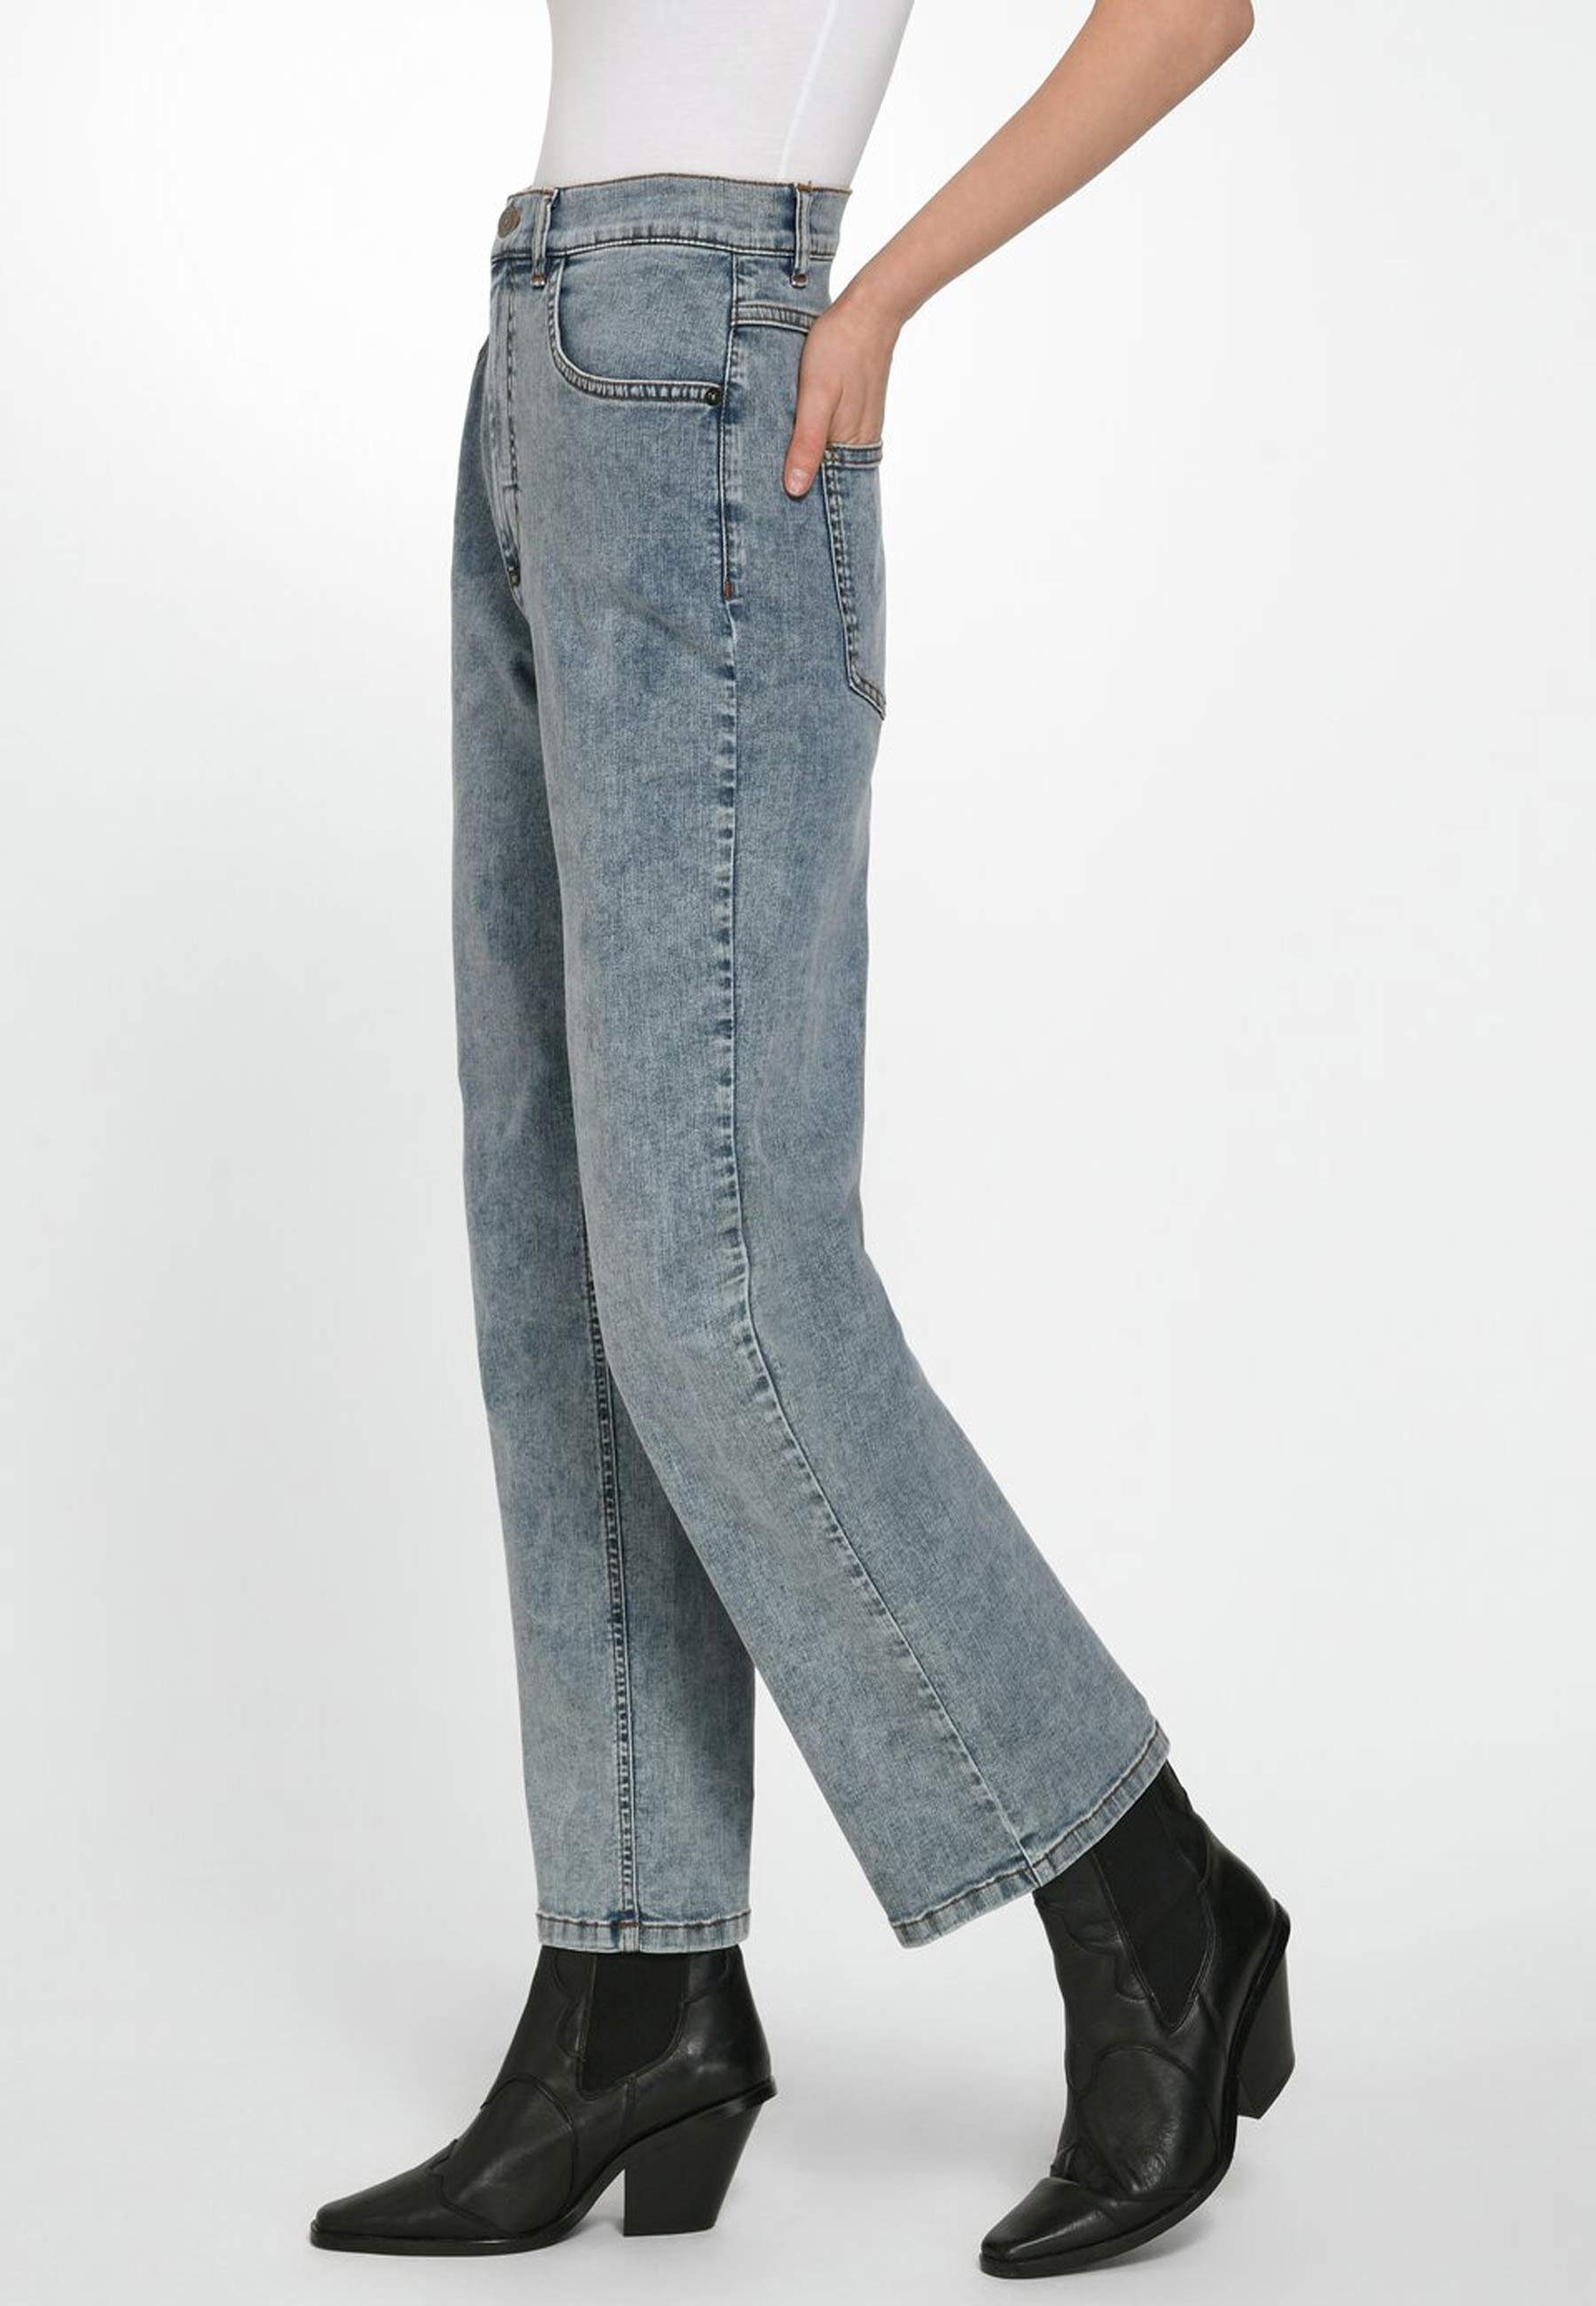 Cotton Design 5-Pocket-Jeans hellblau mit WALL modernem London